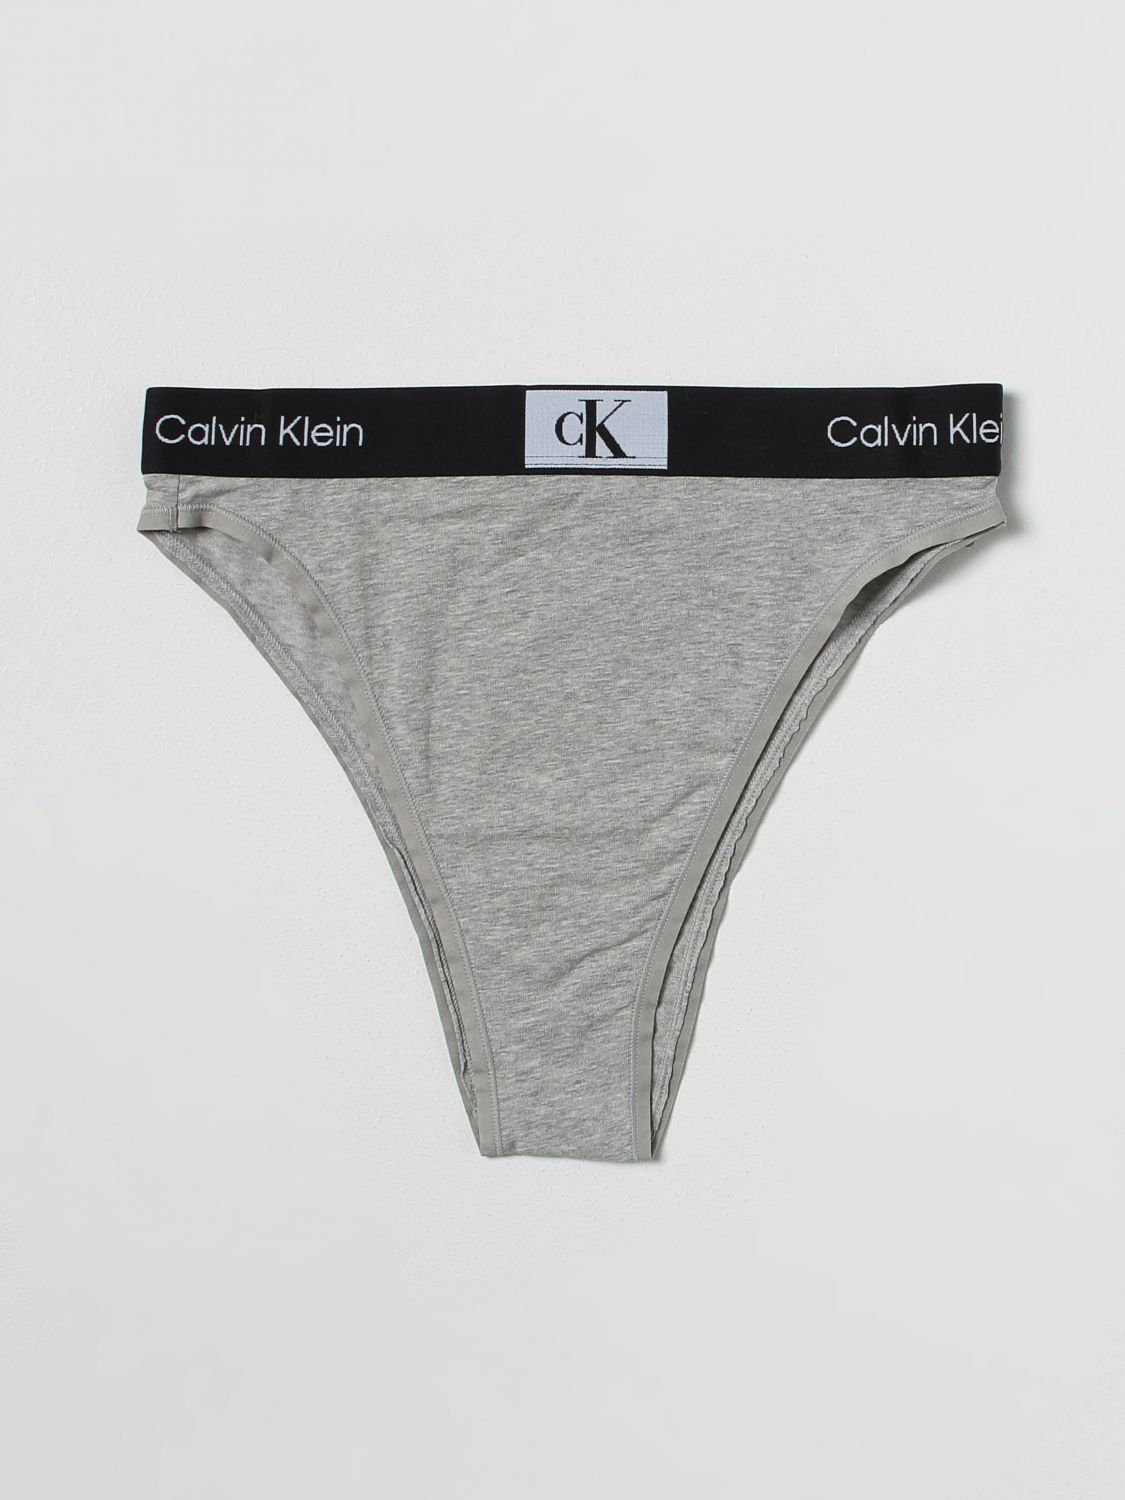 Calvin Klein Hello Kitty Underwear | ModeSens